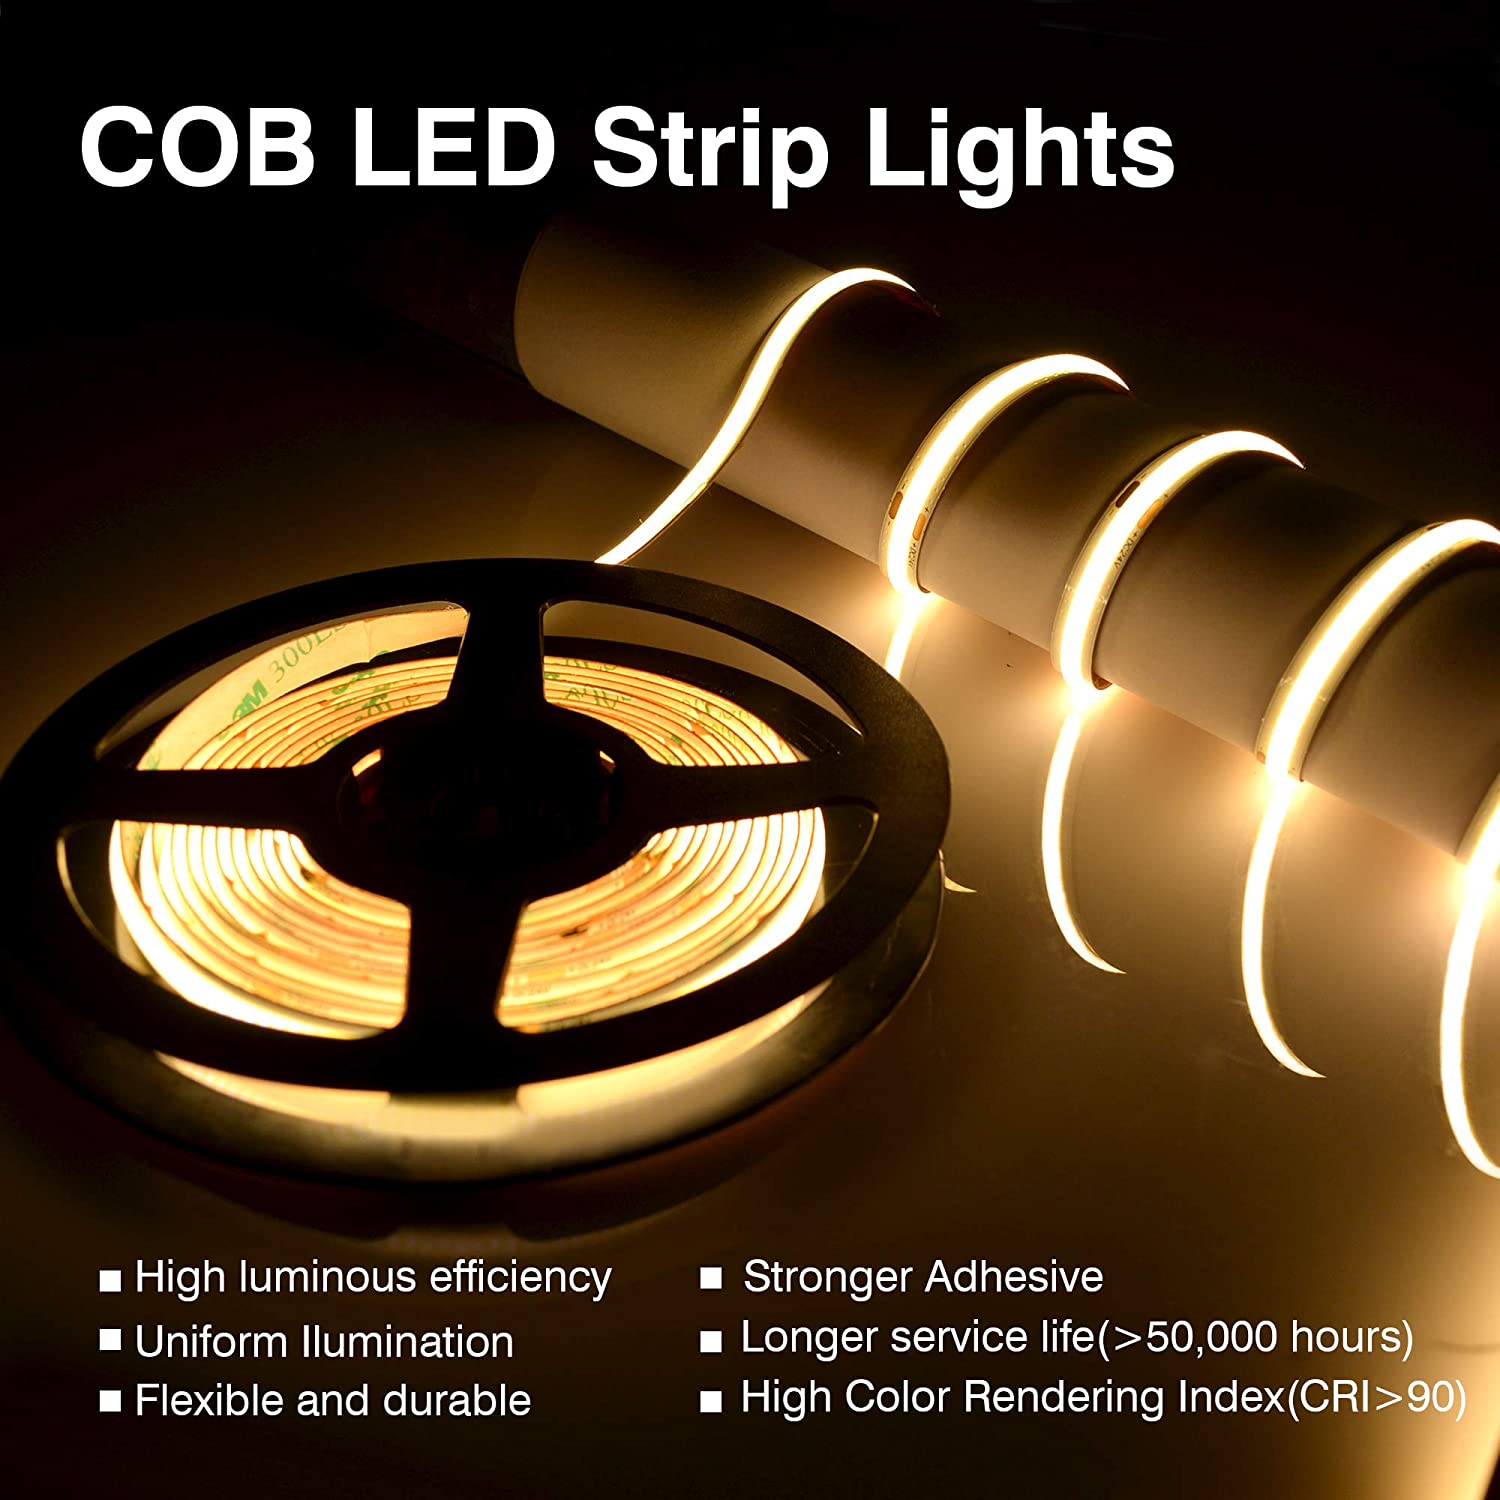 COB LED Strip Light Warm White 3000K, 5M 300LEDs/M Super Bright Flexible CRI90+ LED Tape, DC12V for Cabinet, Bedroom, Kitchen DIY Lighting